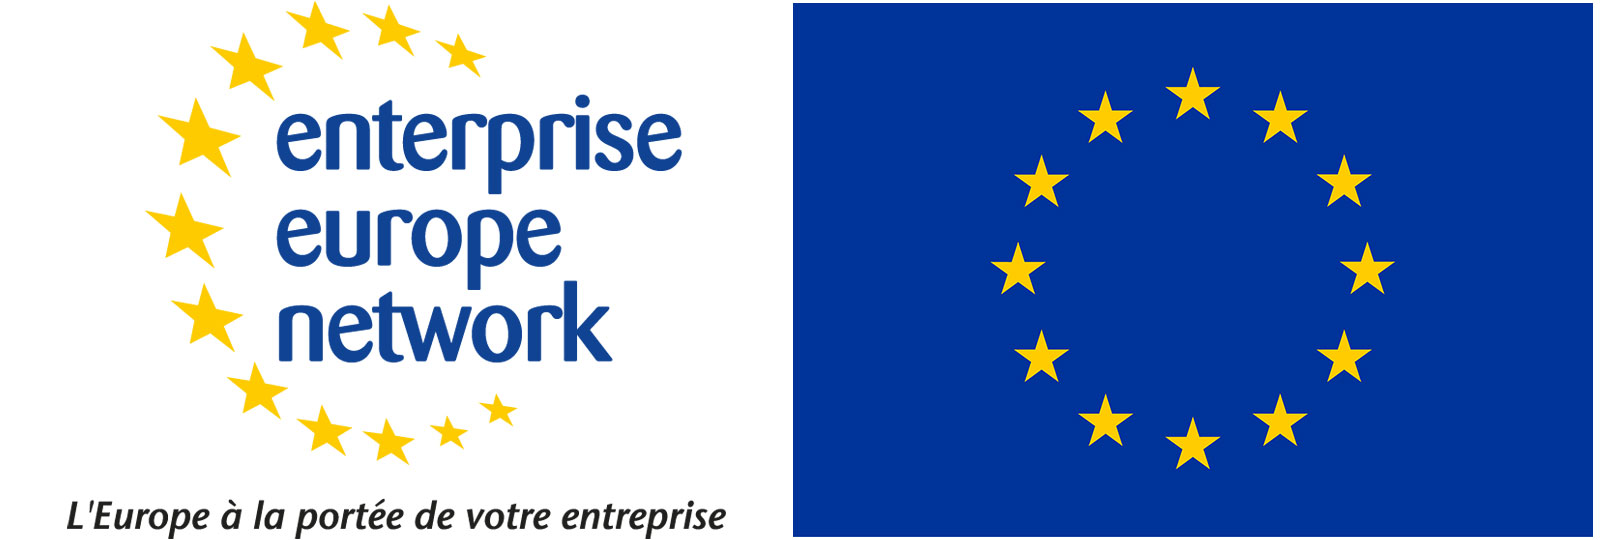 logo Enterprise Europe Network - drapeau européen